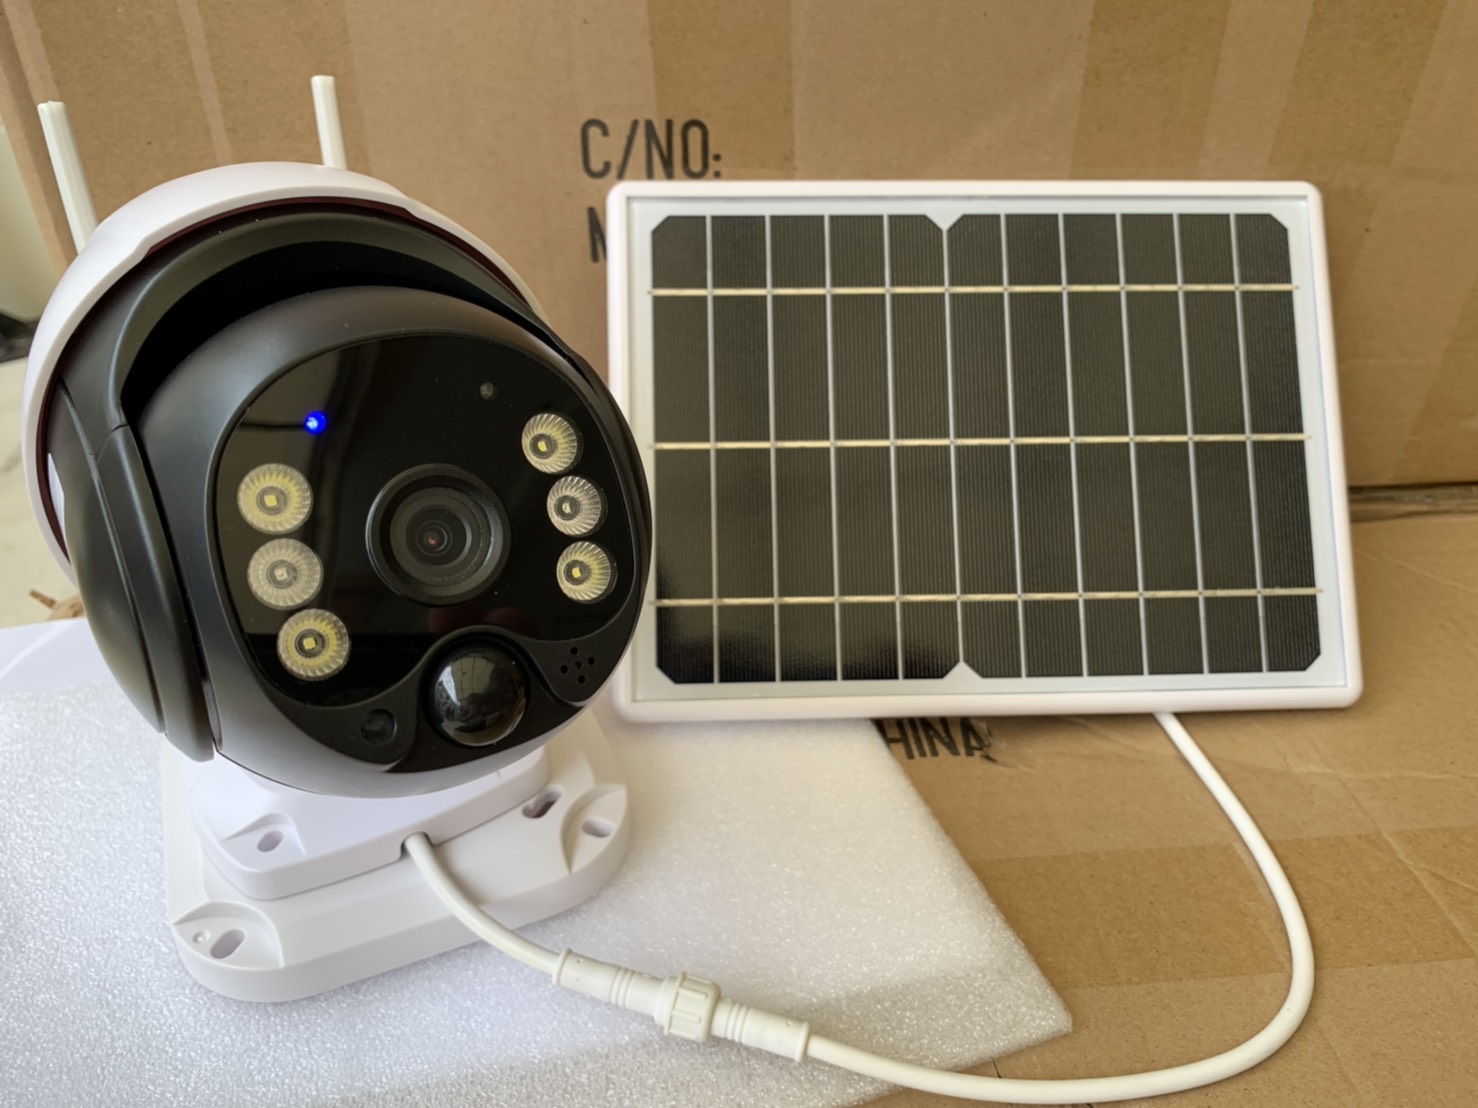 CCTV วงจรปิดโซล่าเซลล์ พลังงานแสงอาทิตย์ ใช้เครือข่ายมือถือ